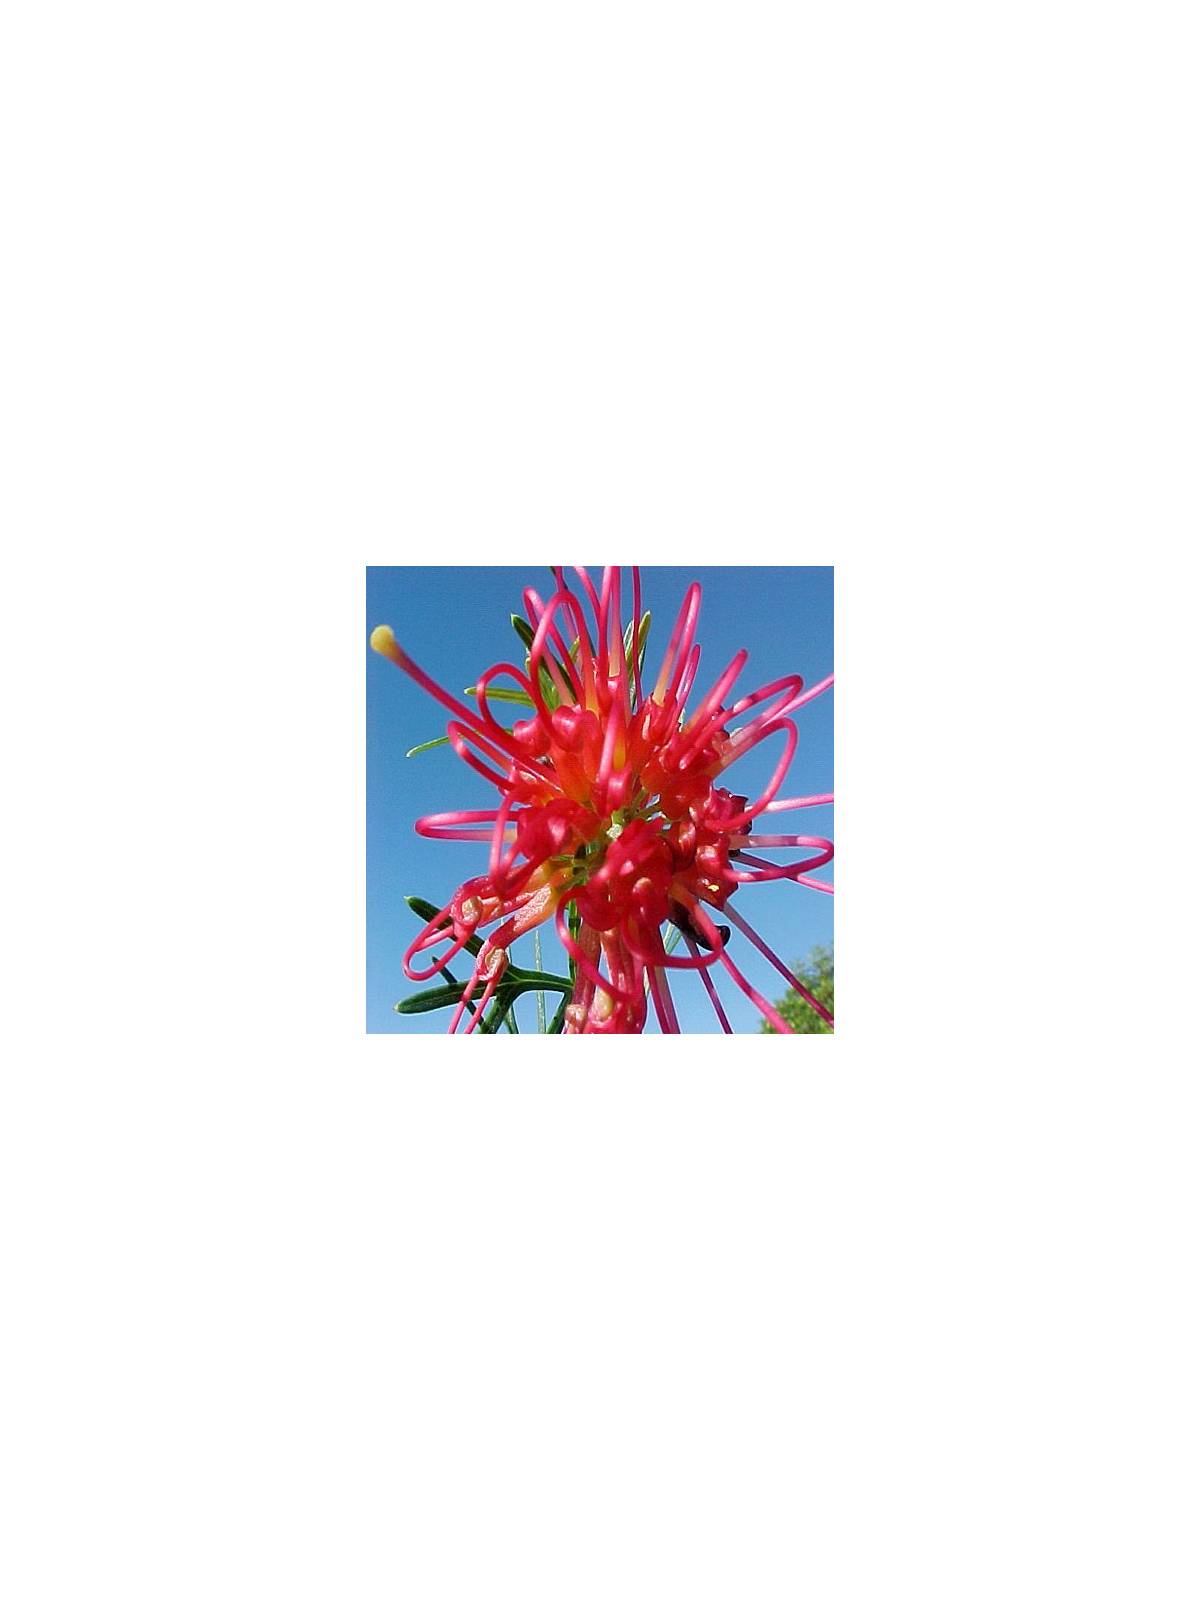 RED GREVILLEA Flower